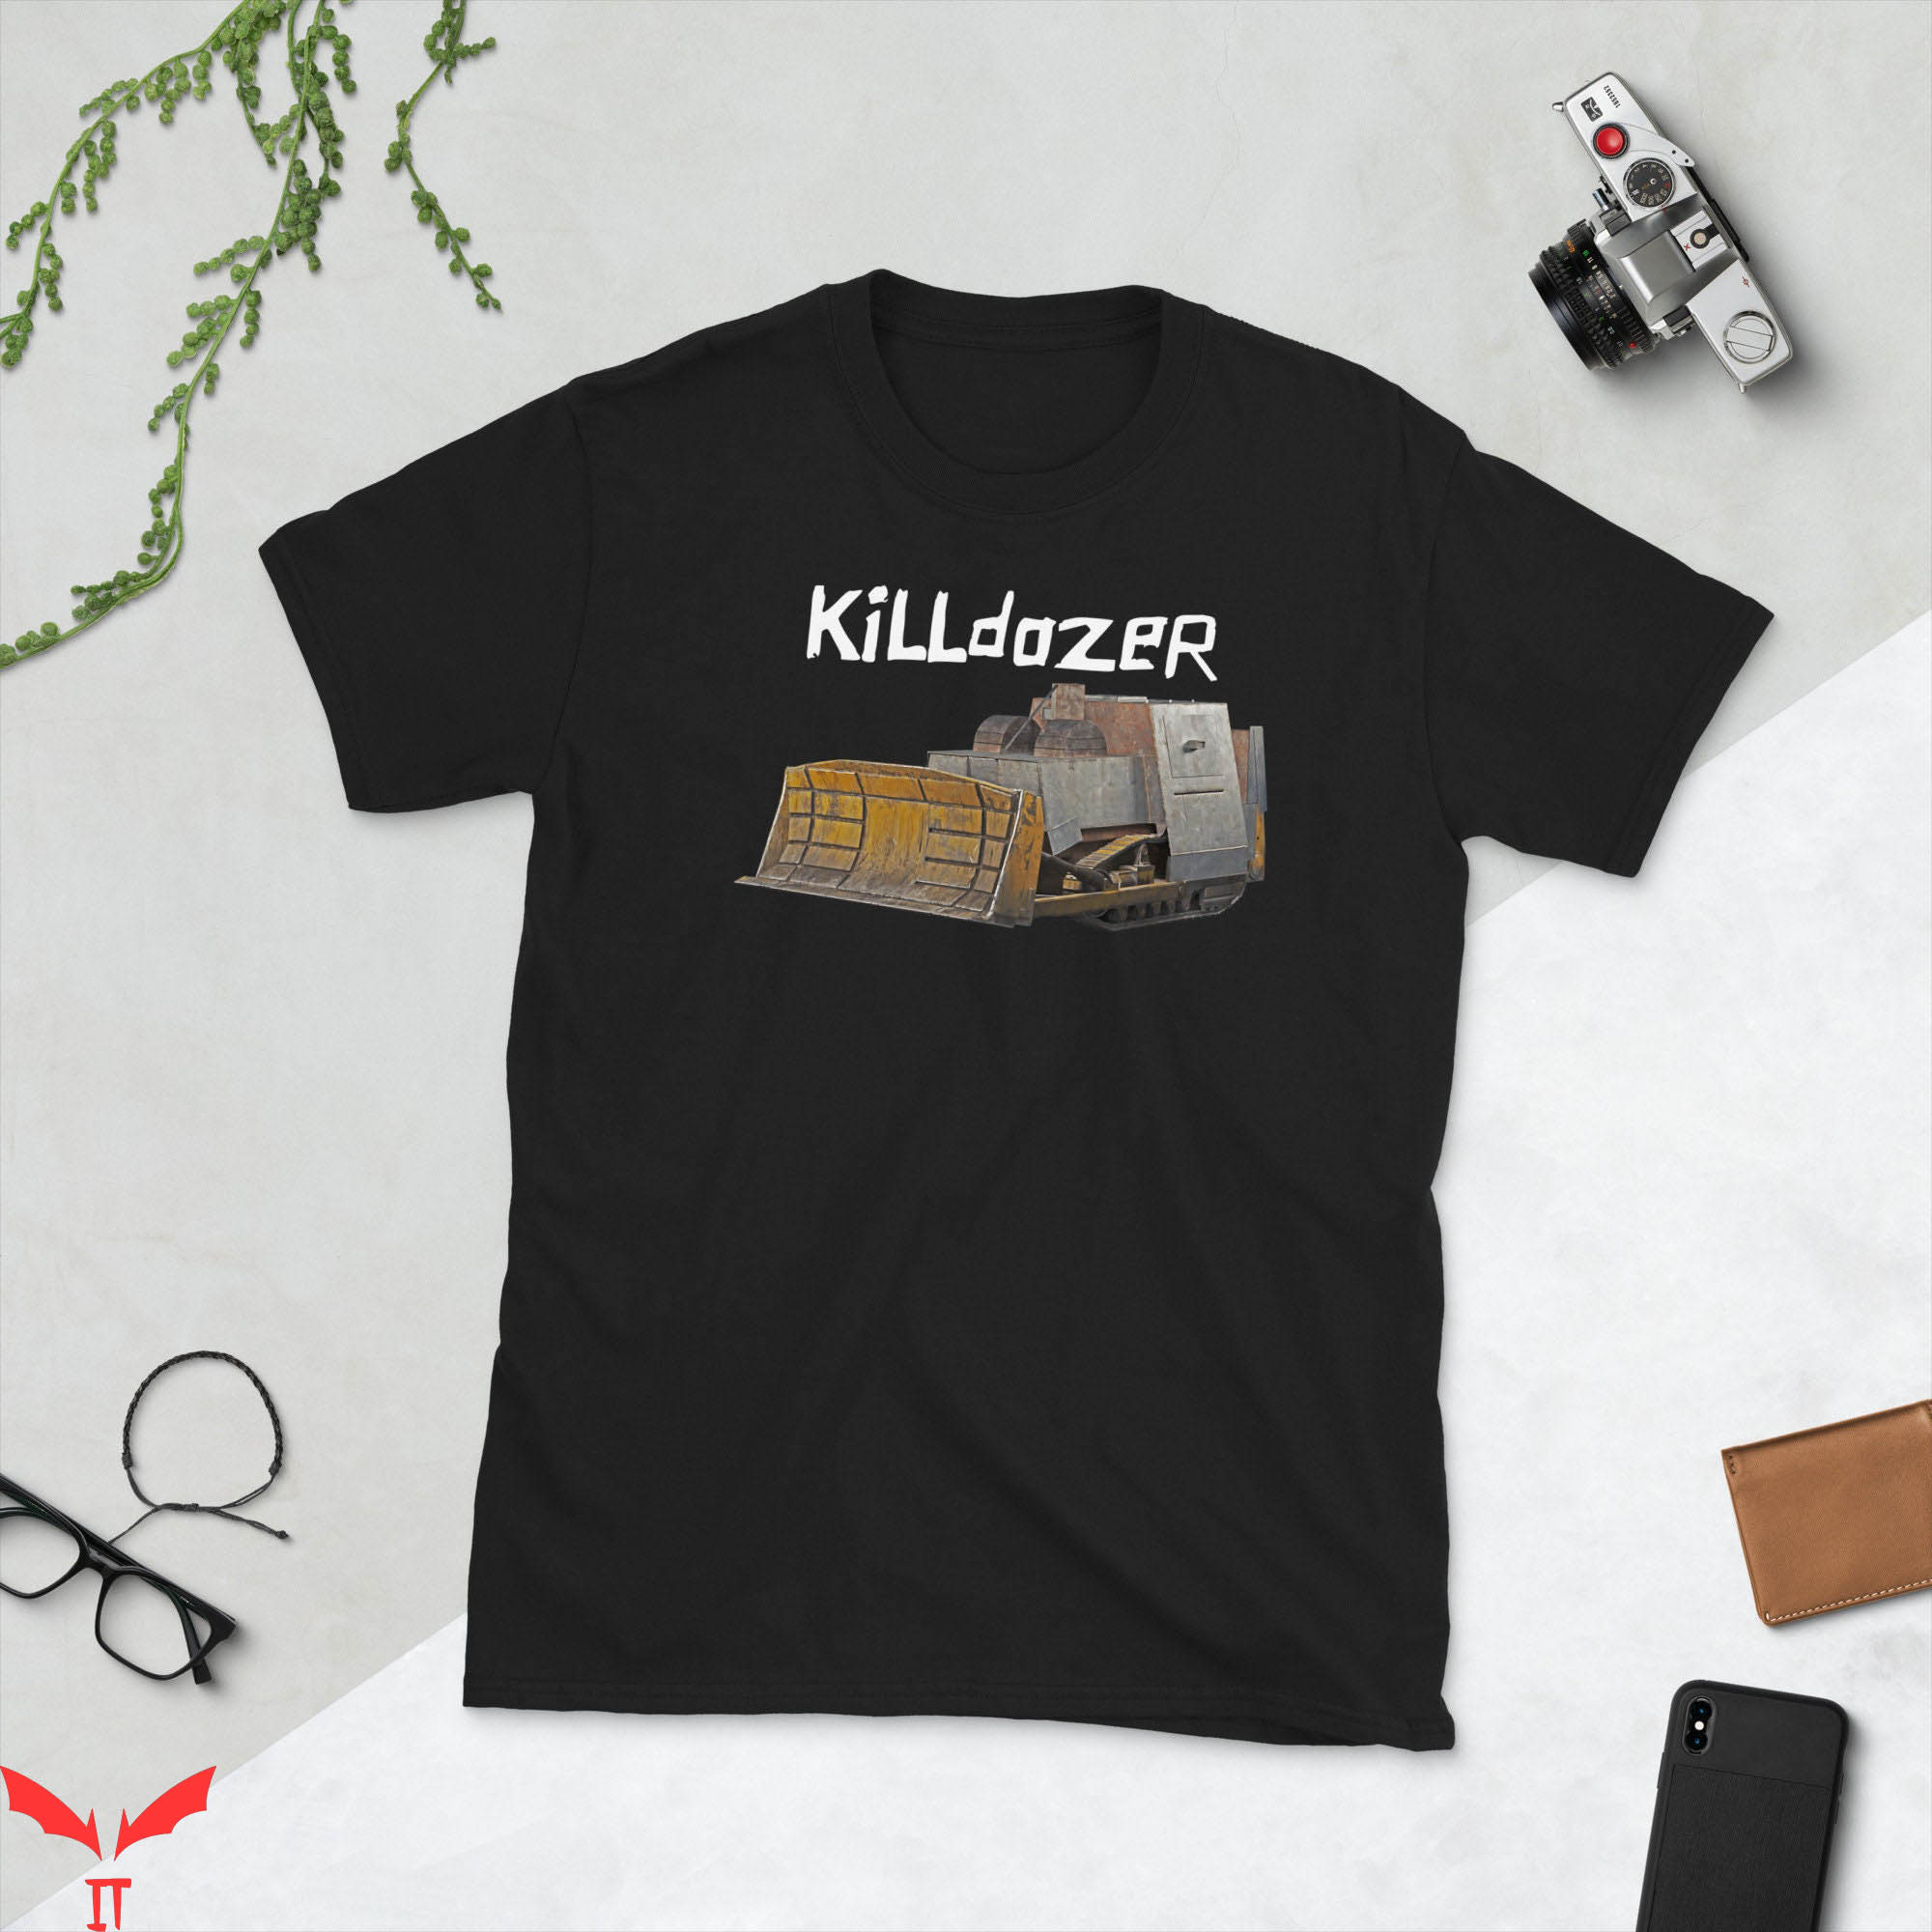 Killdozer T-Shirt Cool Graphic Trendy Design Tee Shirt